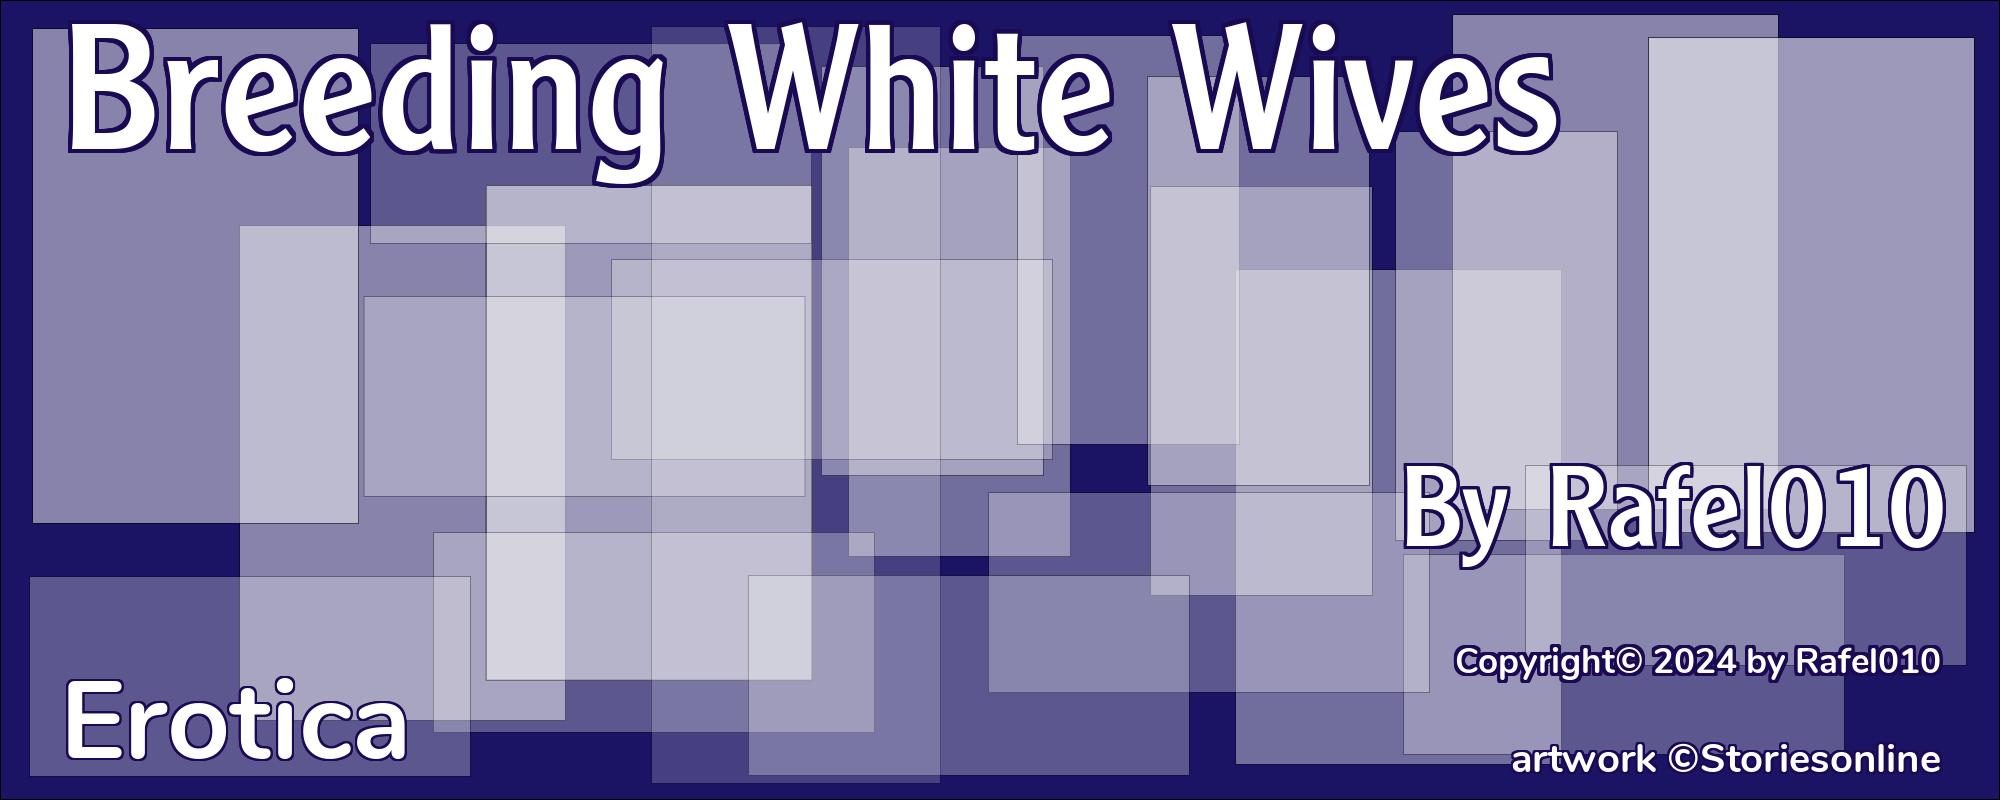 Breeding White Wives - Cover